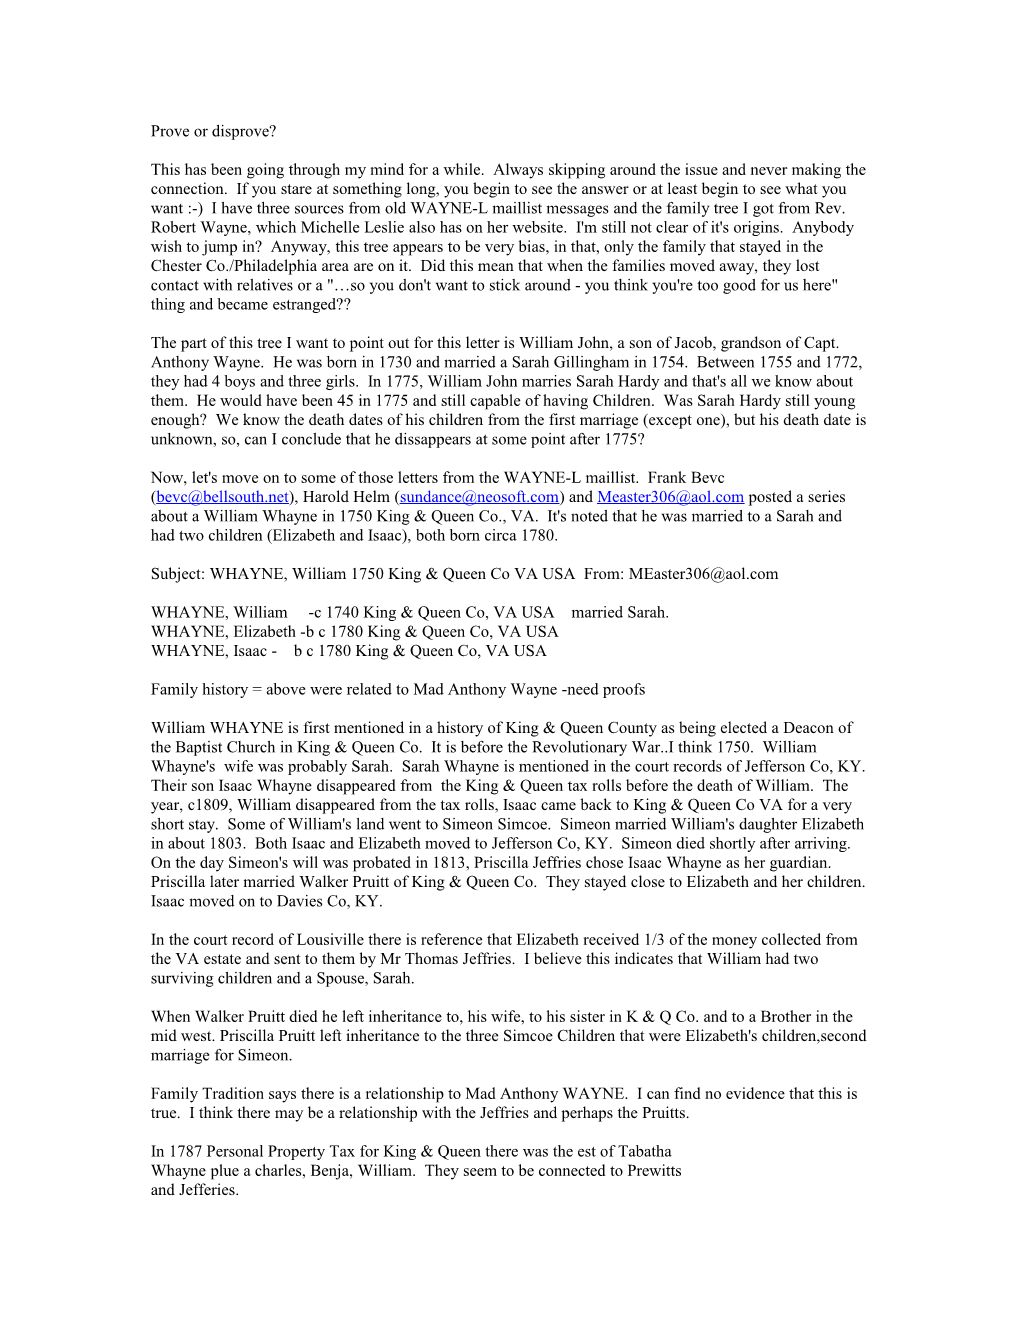 Subject: WHAYNE, William 1750 King & Queen County Virginia USA